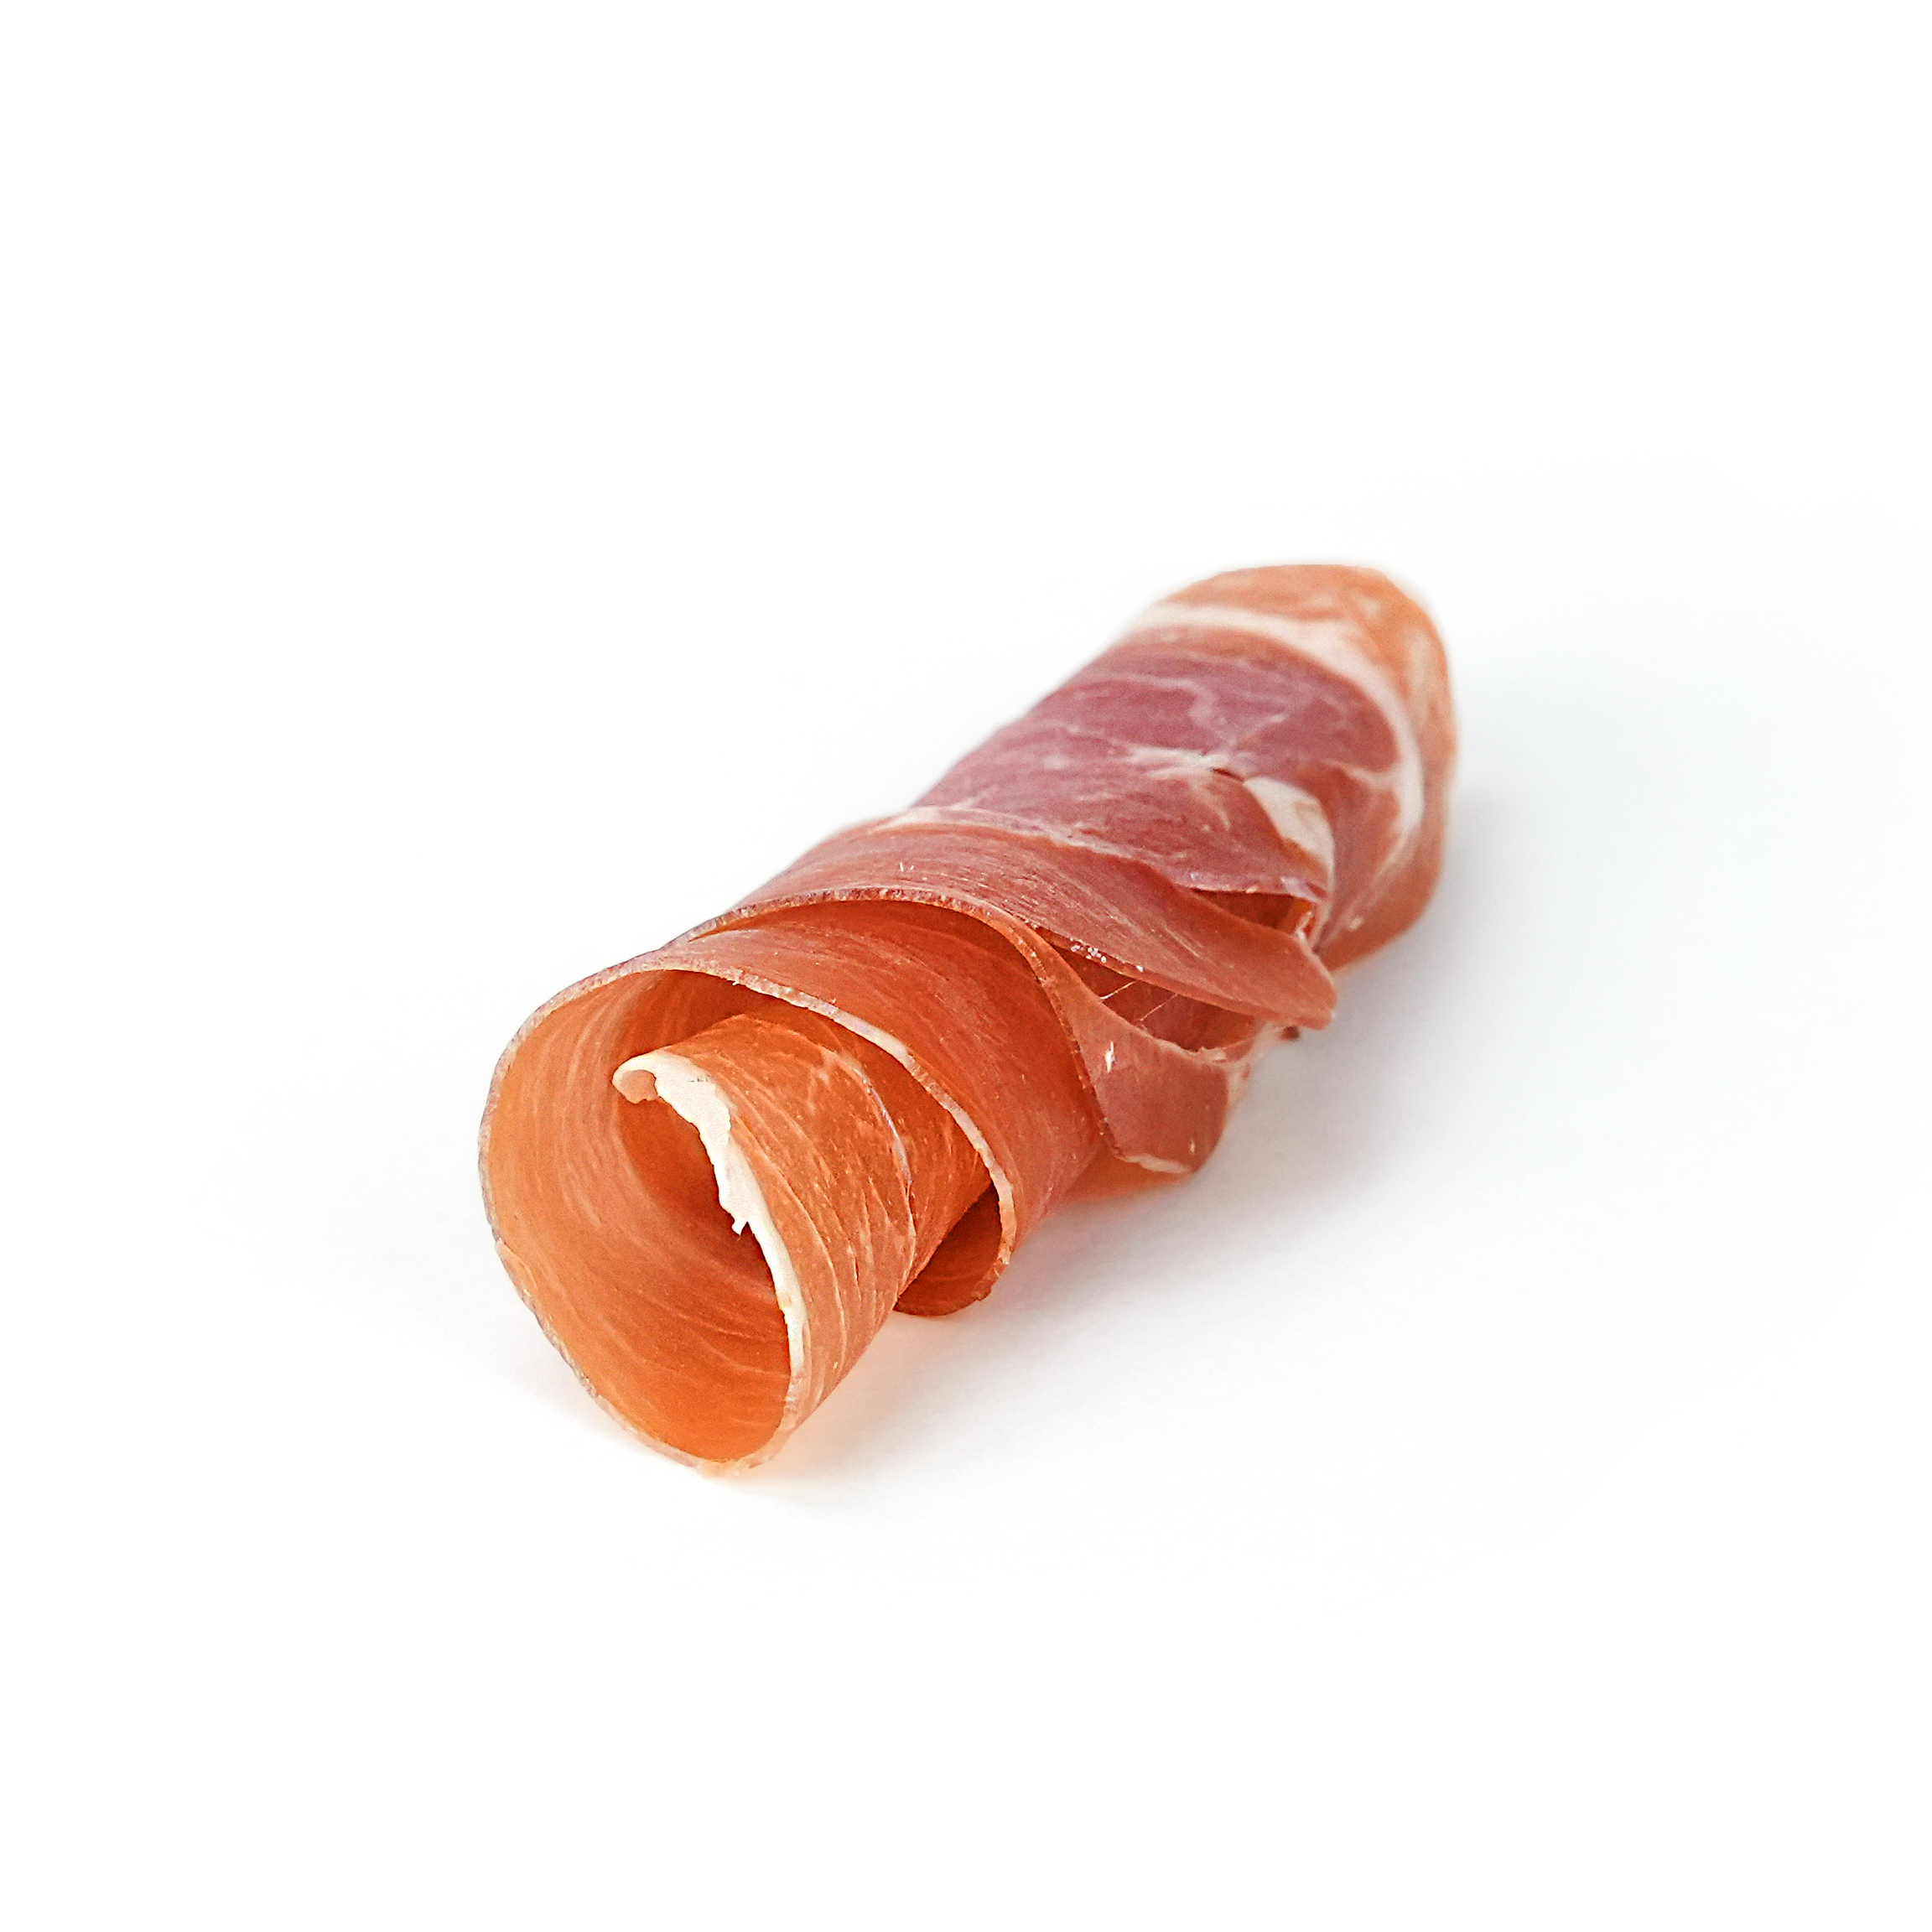 Andere plaatsen bleek zuiden Buy Prosciutto di Parma, Whole Boneless Ham 14-20 lb Online | Markys